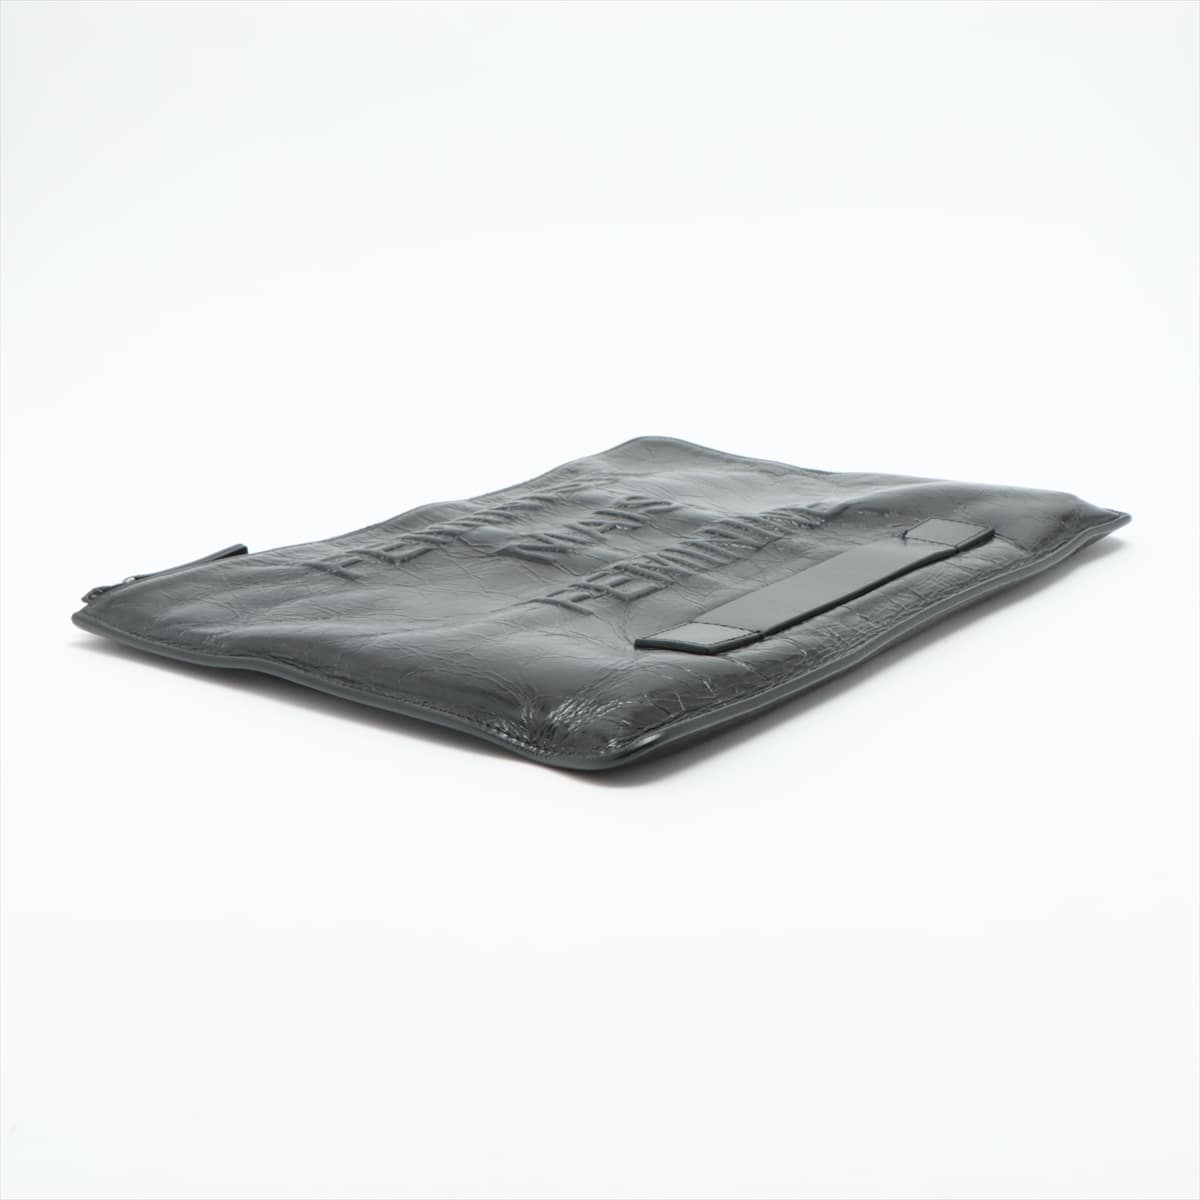 Chanel Vintage Leather Clutch bag Black Silver Metal fittings 20XXXXXX